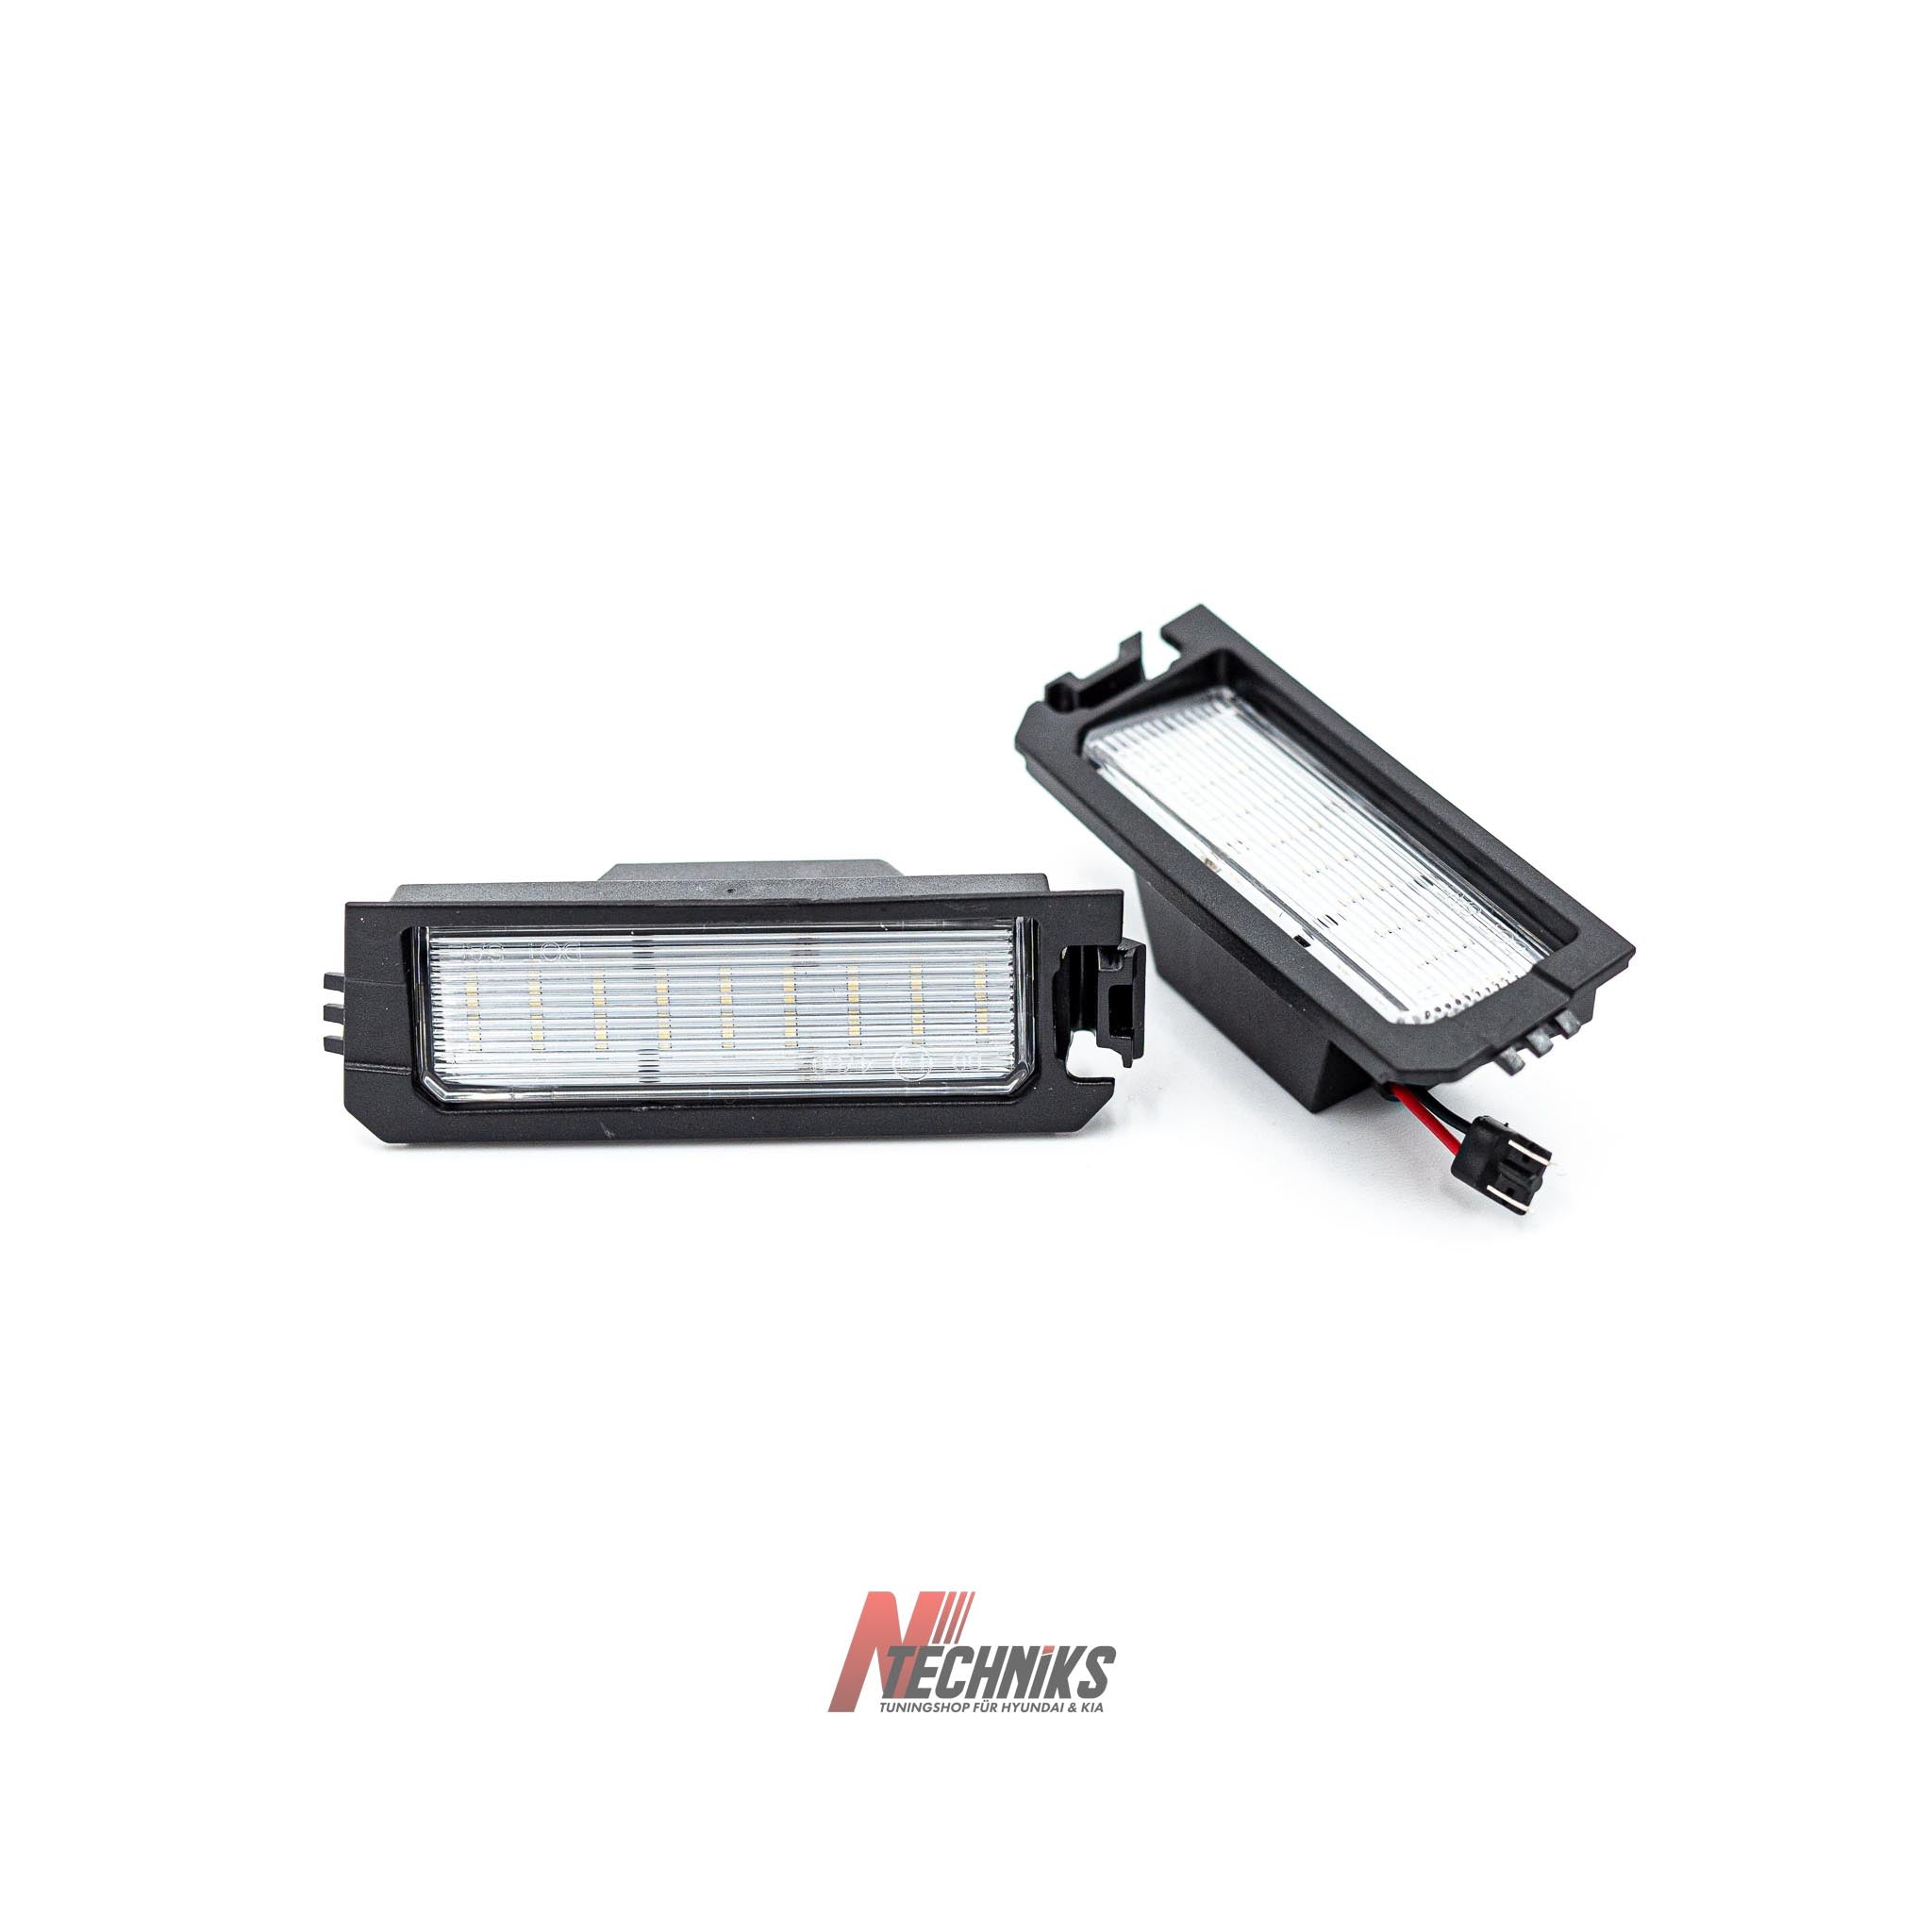 N TECHNIKS® LED Kennzeichenbeleuchtung für Hyundai I30N